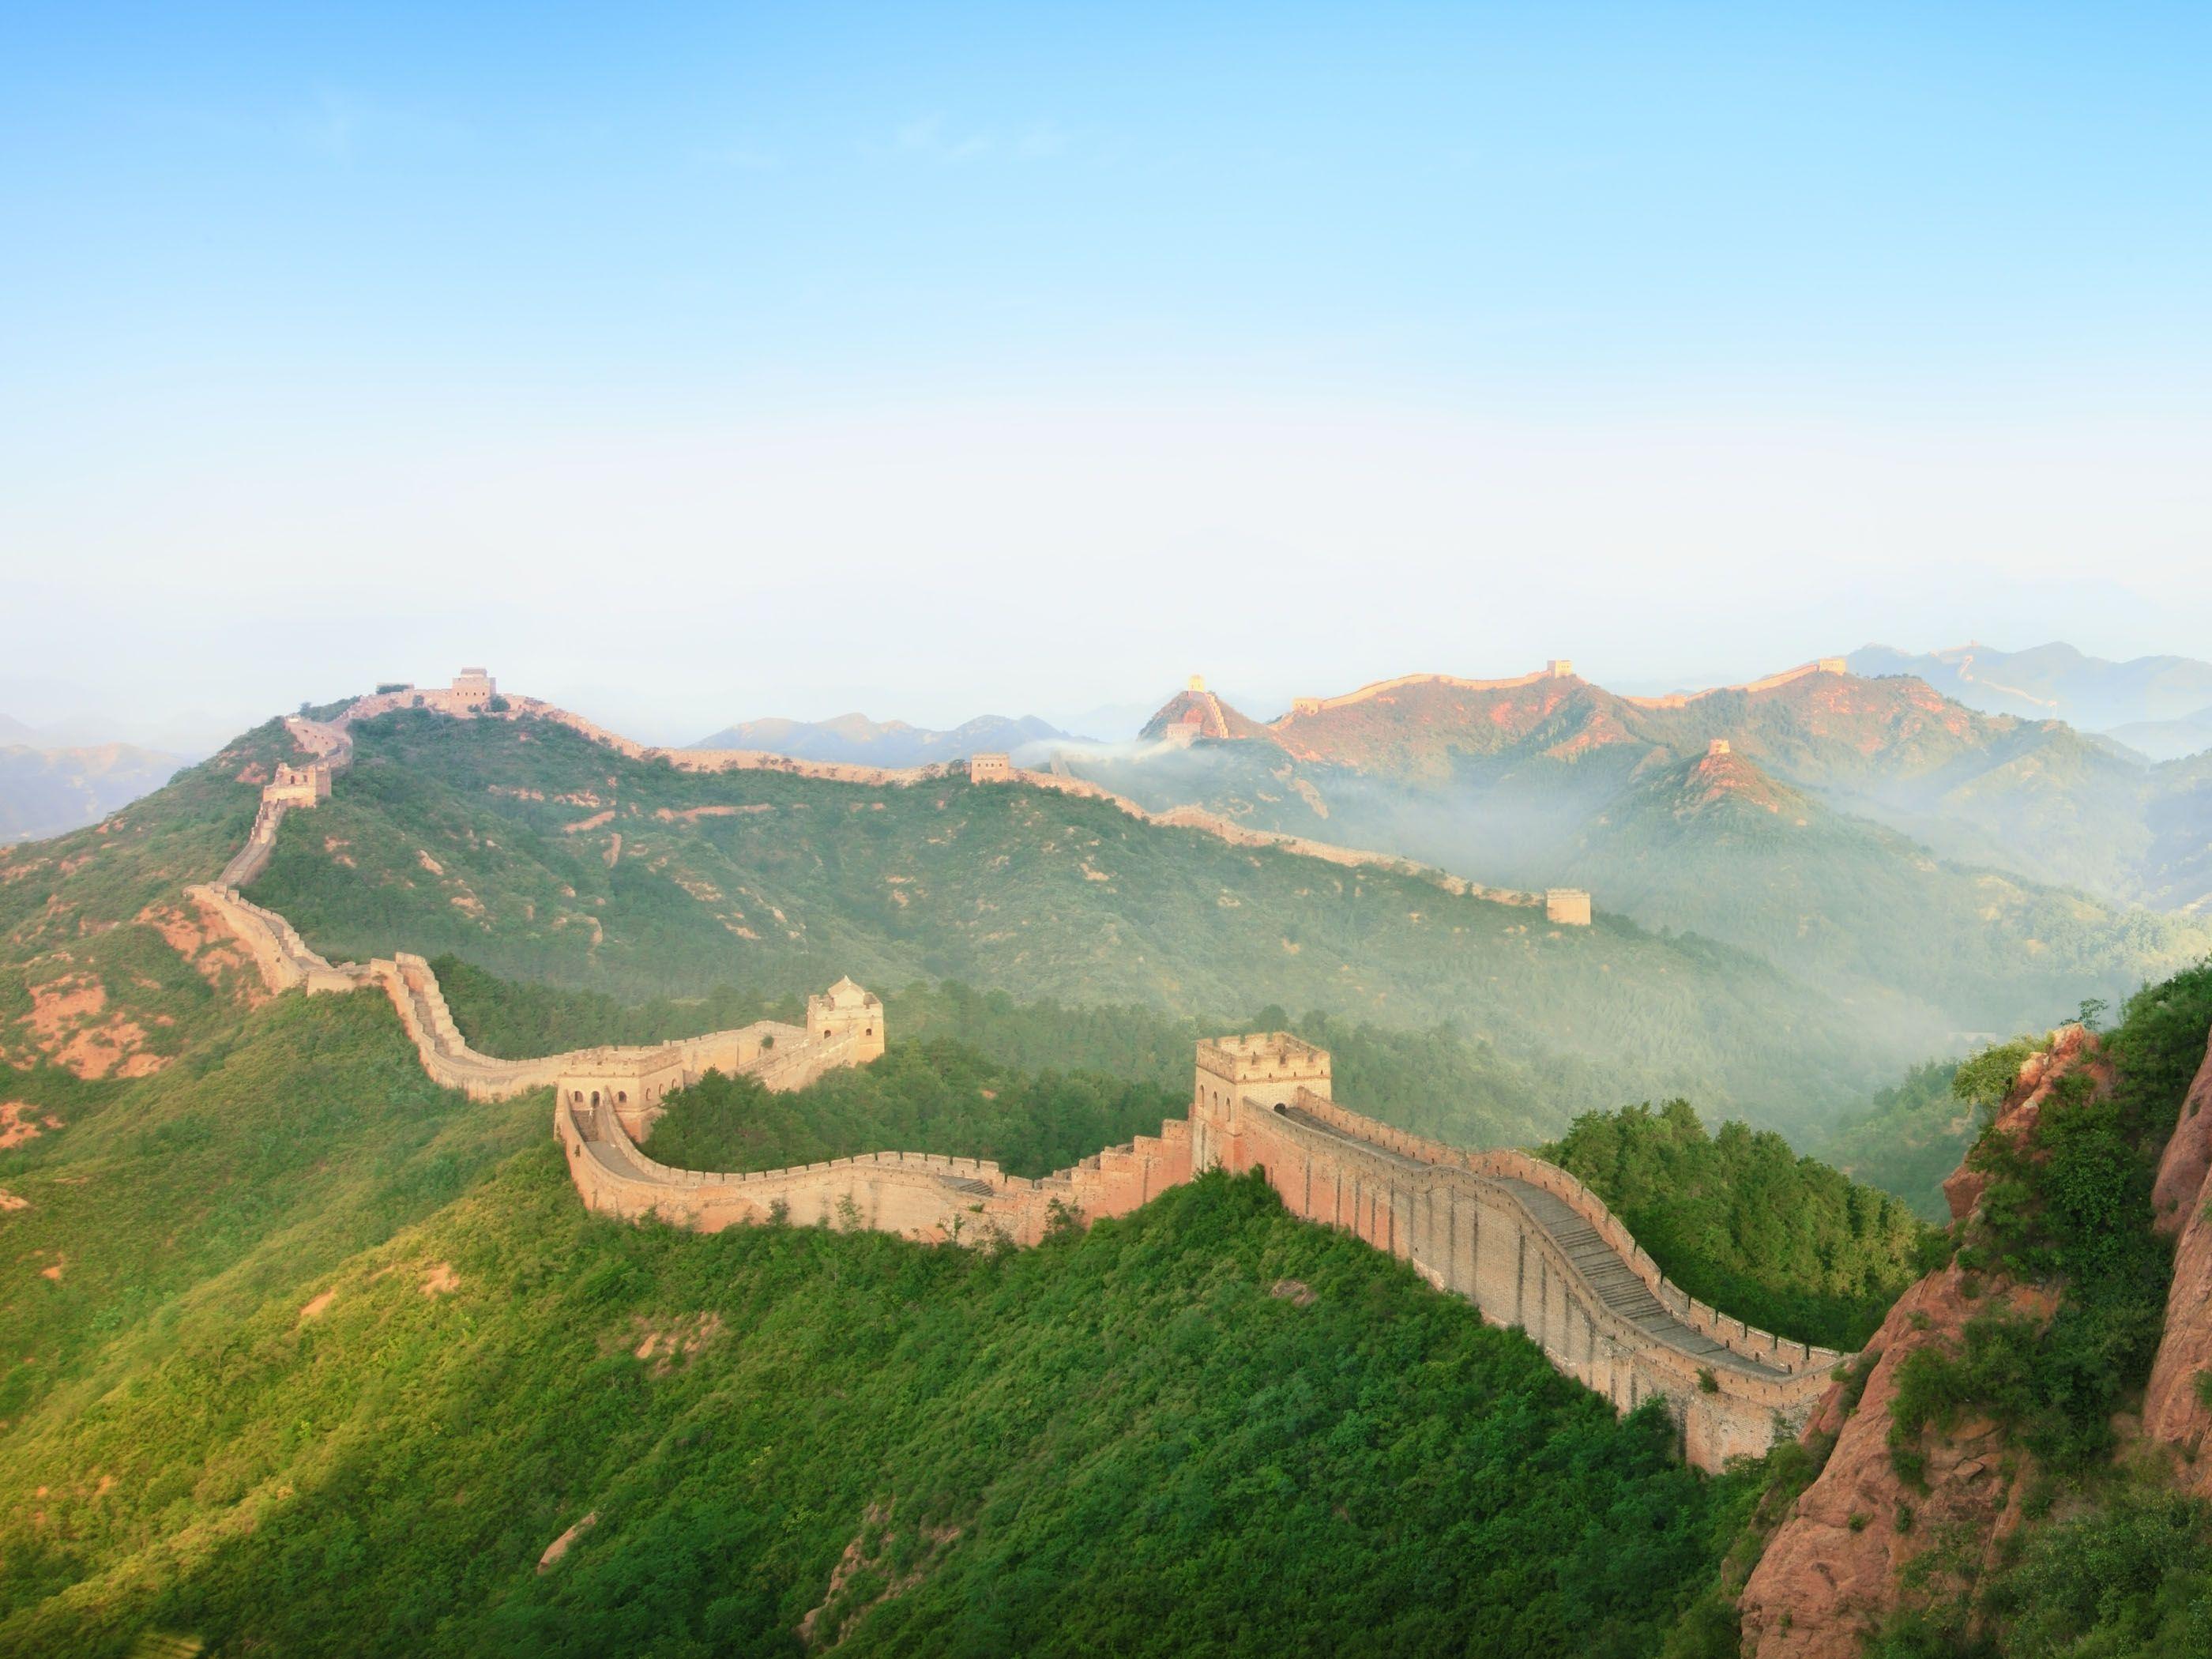 Great Wall Of China Wallpaper High Resolution